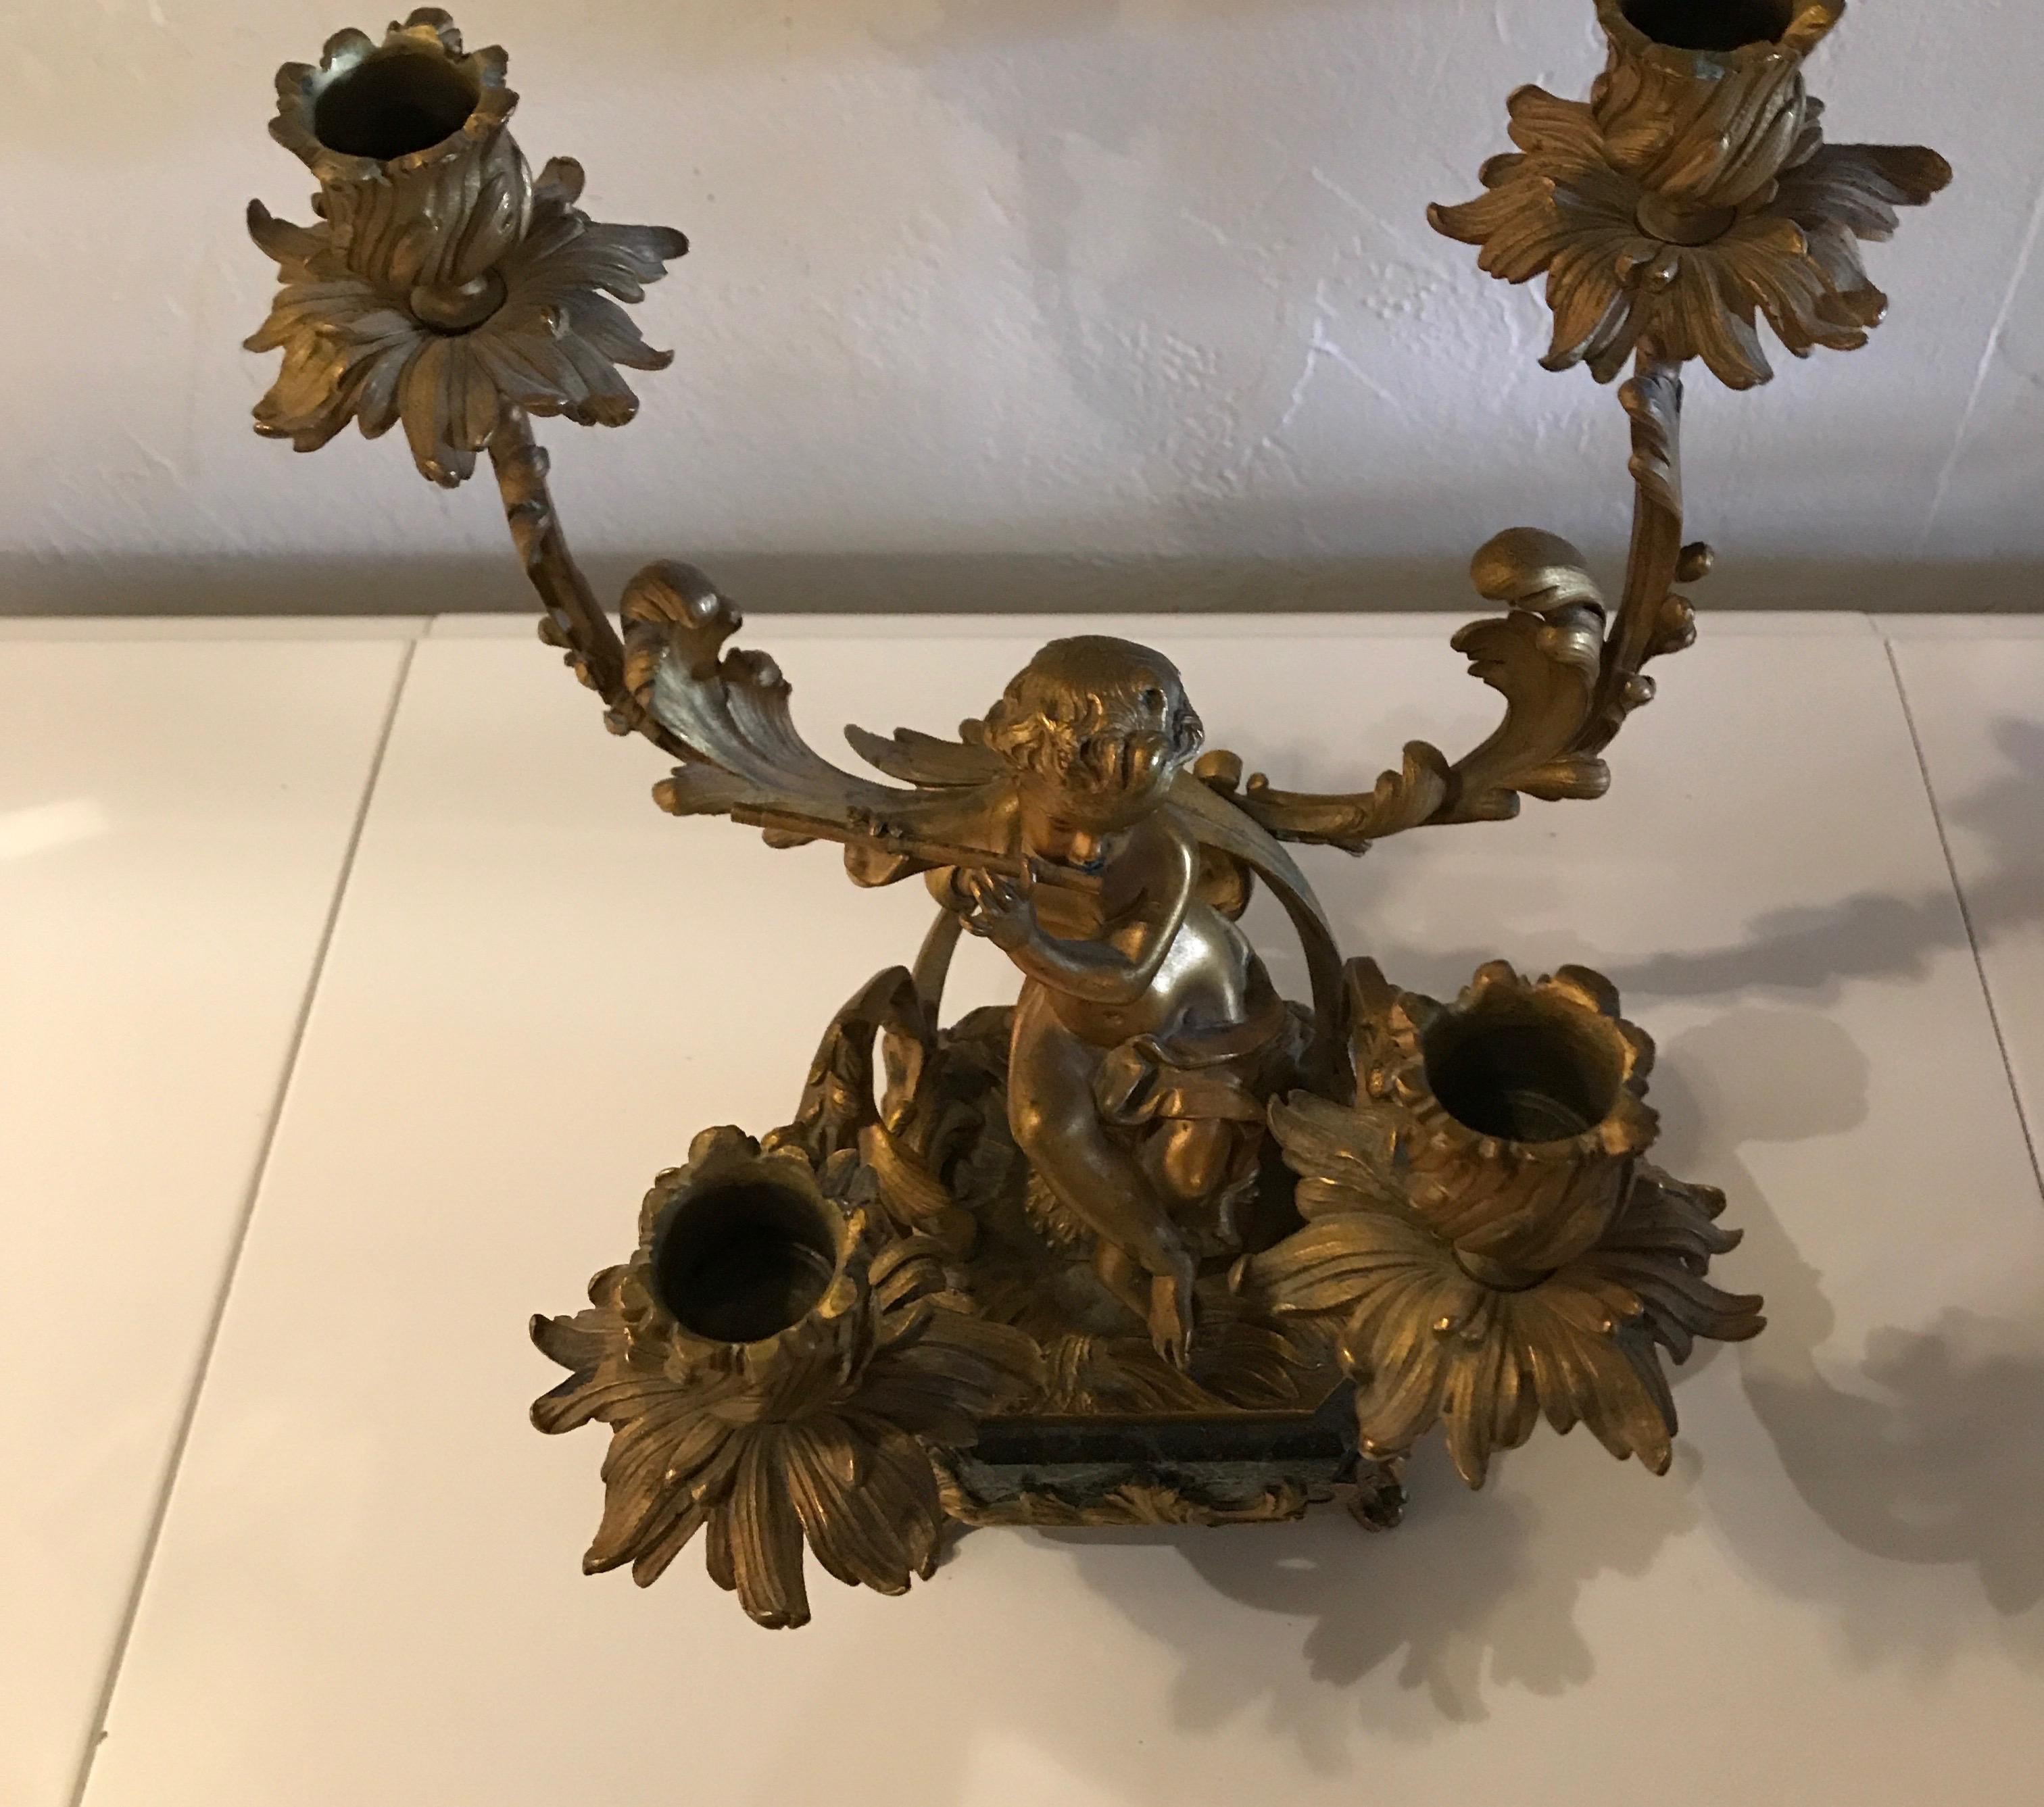 Antique doré bronze candelabra of cherub on marble base. Holds four candles.